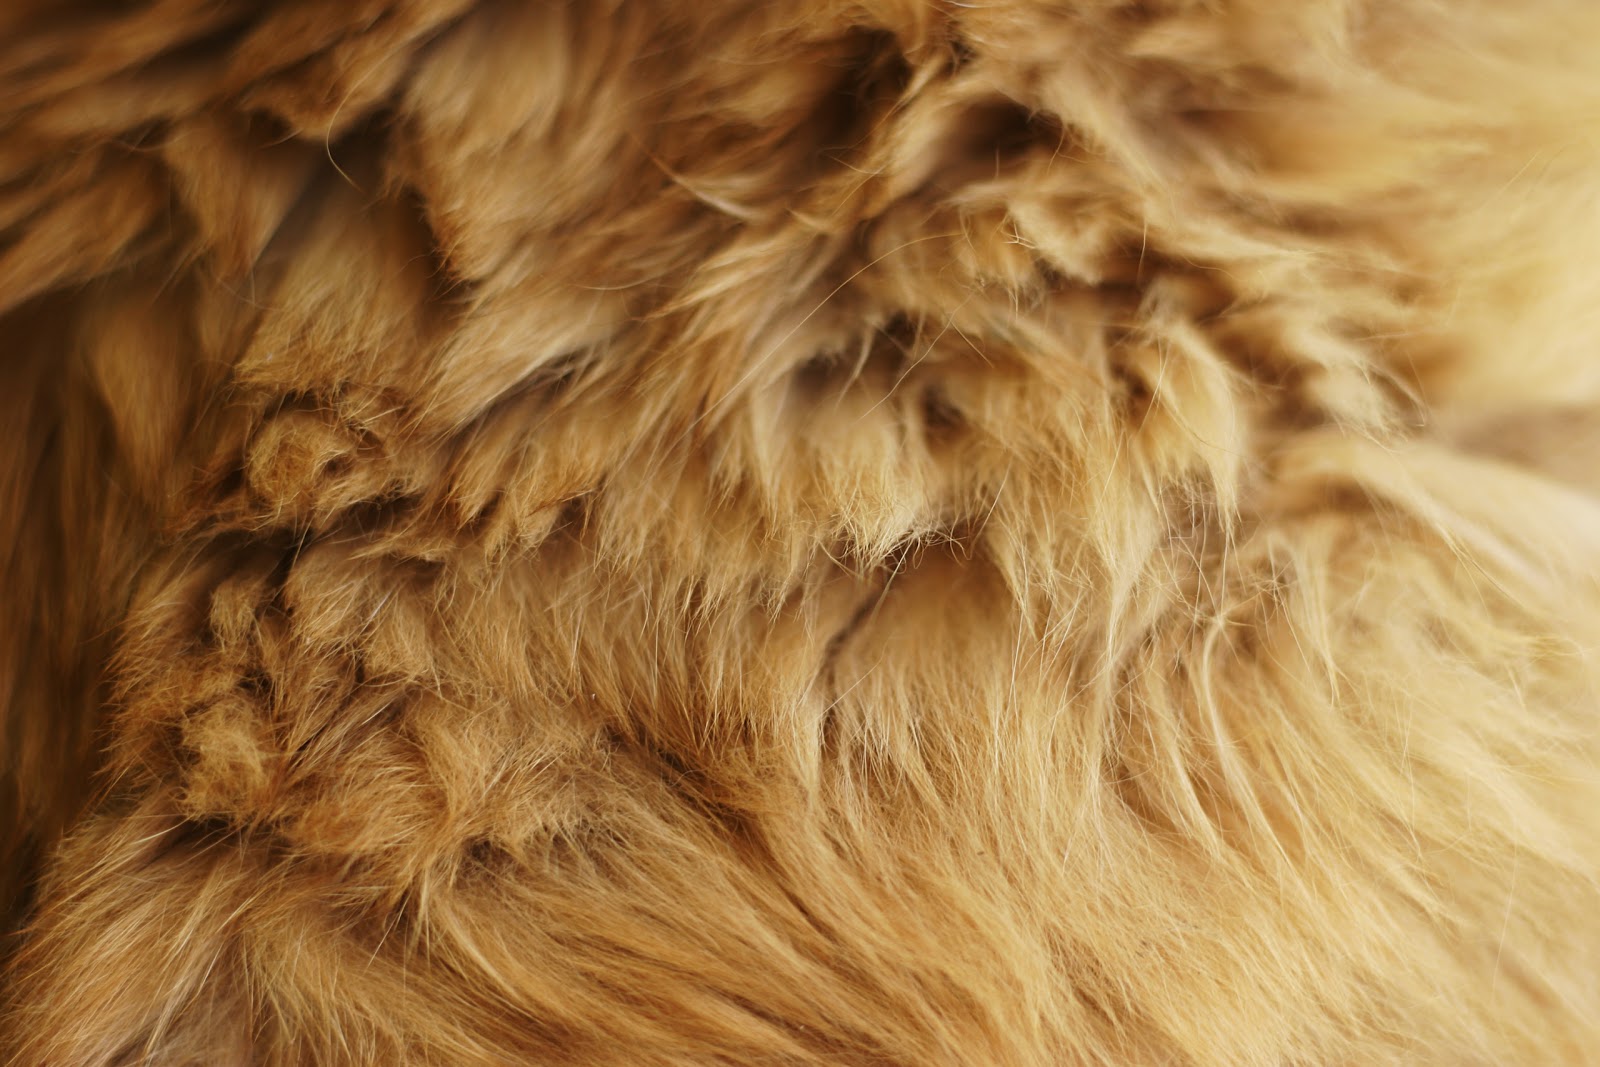 Fur wallpaper, fur fabric, bedroom wallpaper - Magazines-24